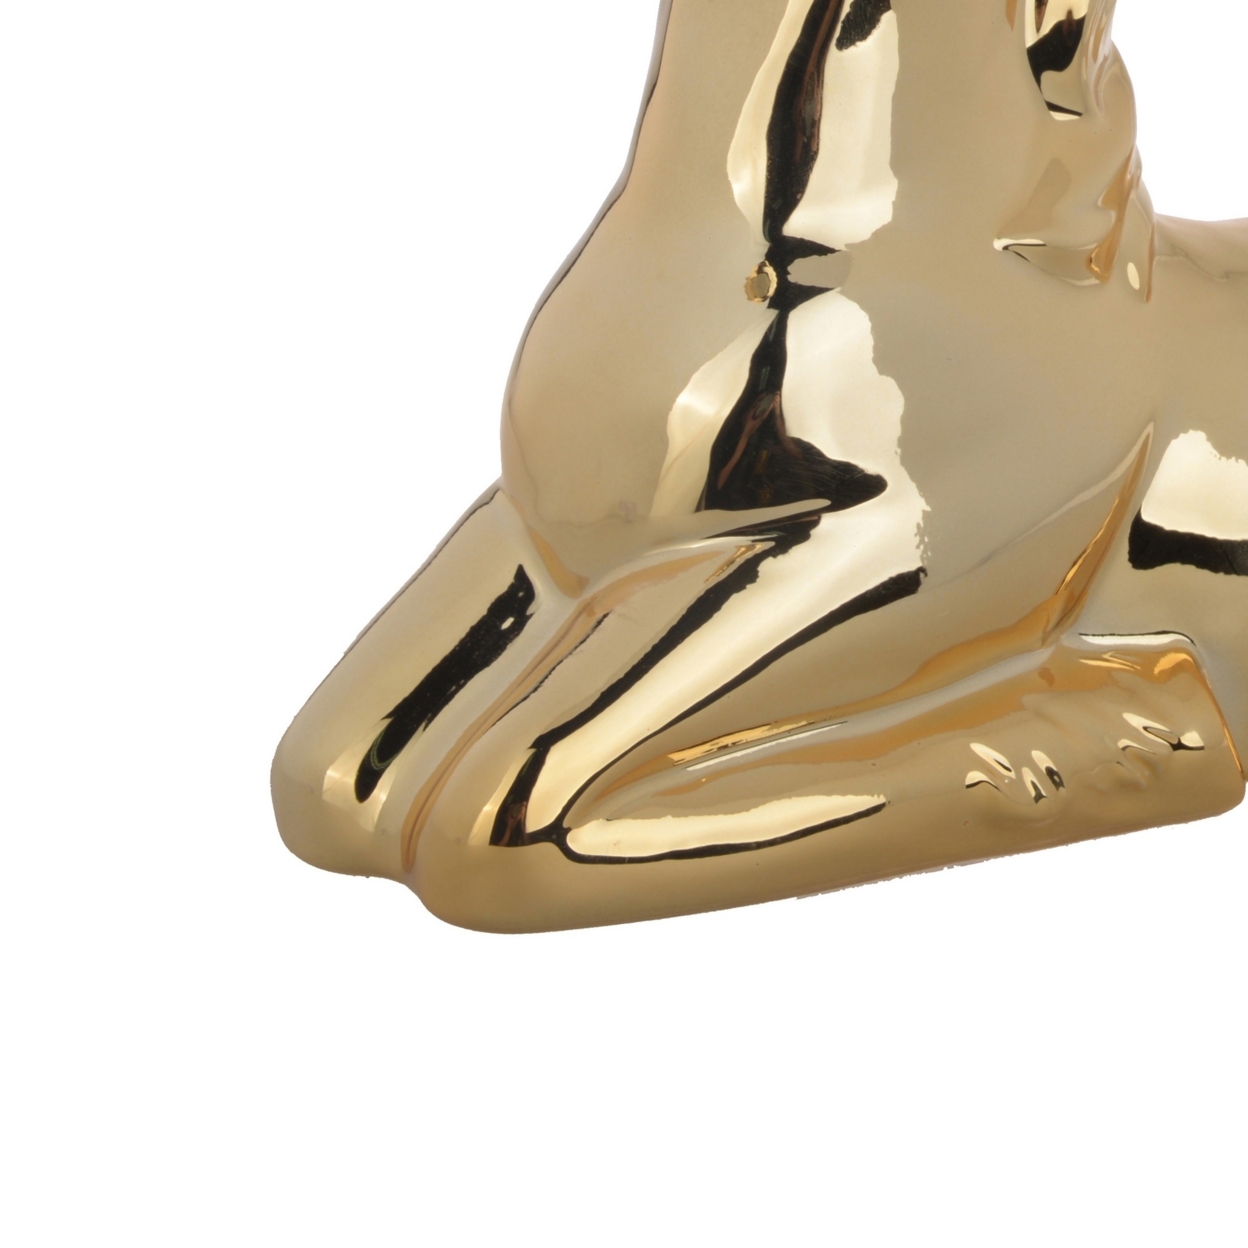 11 Inch Sitting Unicorn Figurine, Ceramic Statuette In Gold Metallic Finish- Saltoro Sherpi